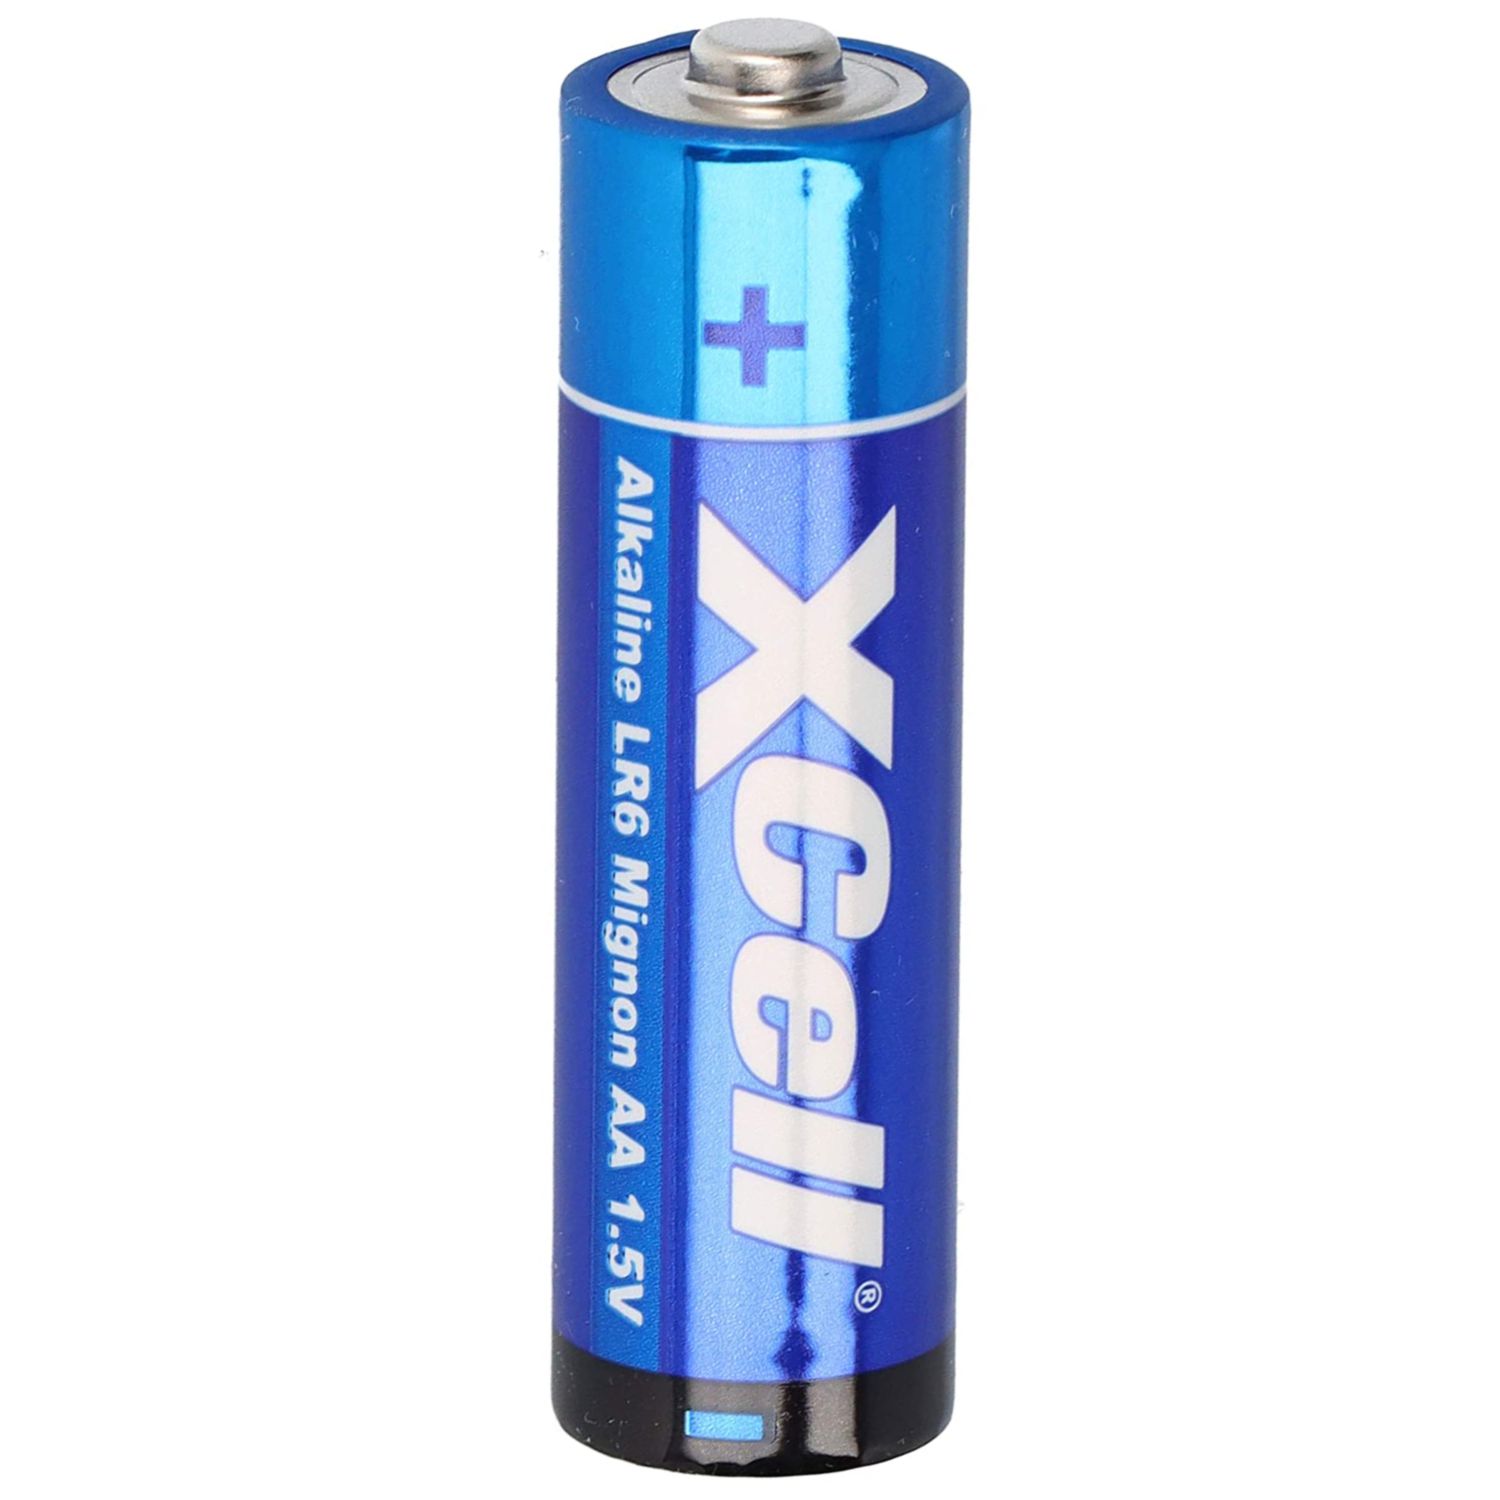 Test: Xcell Performance Alkaline AA